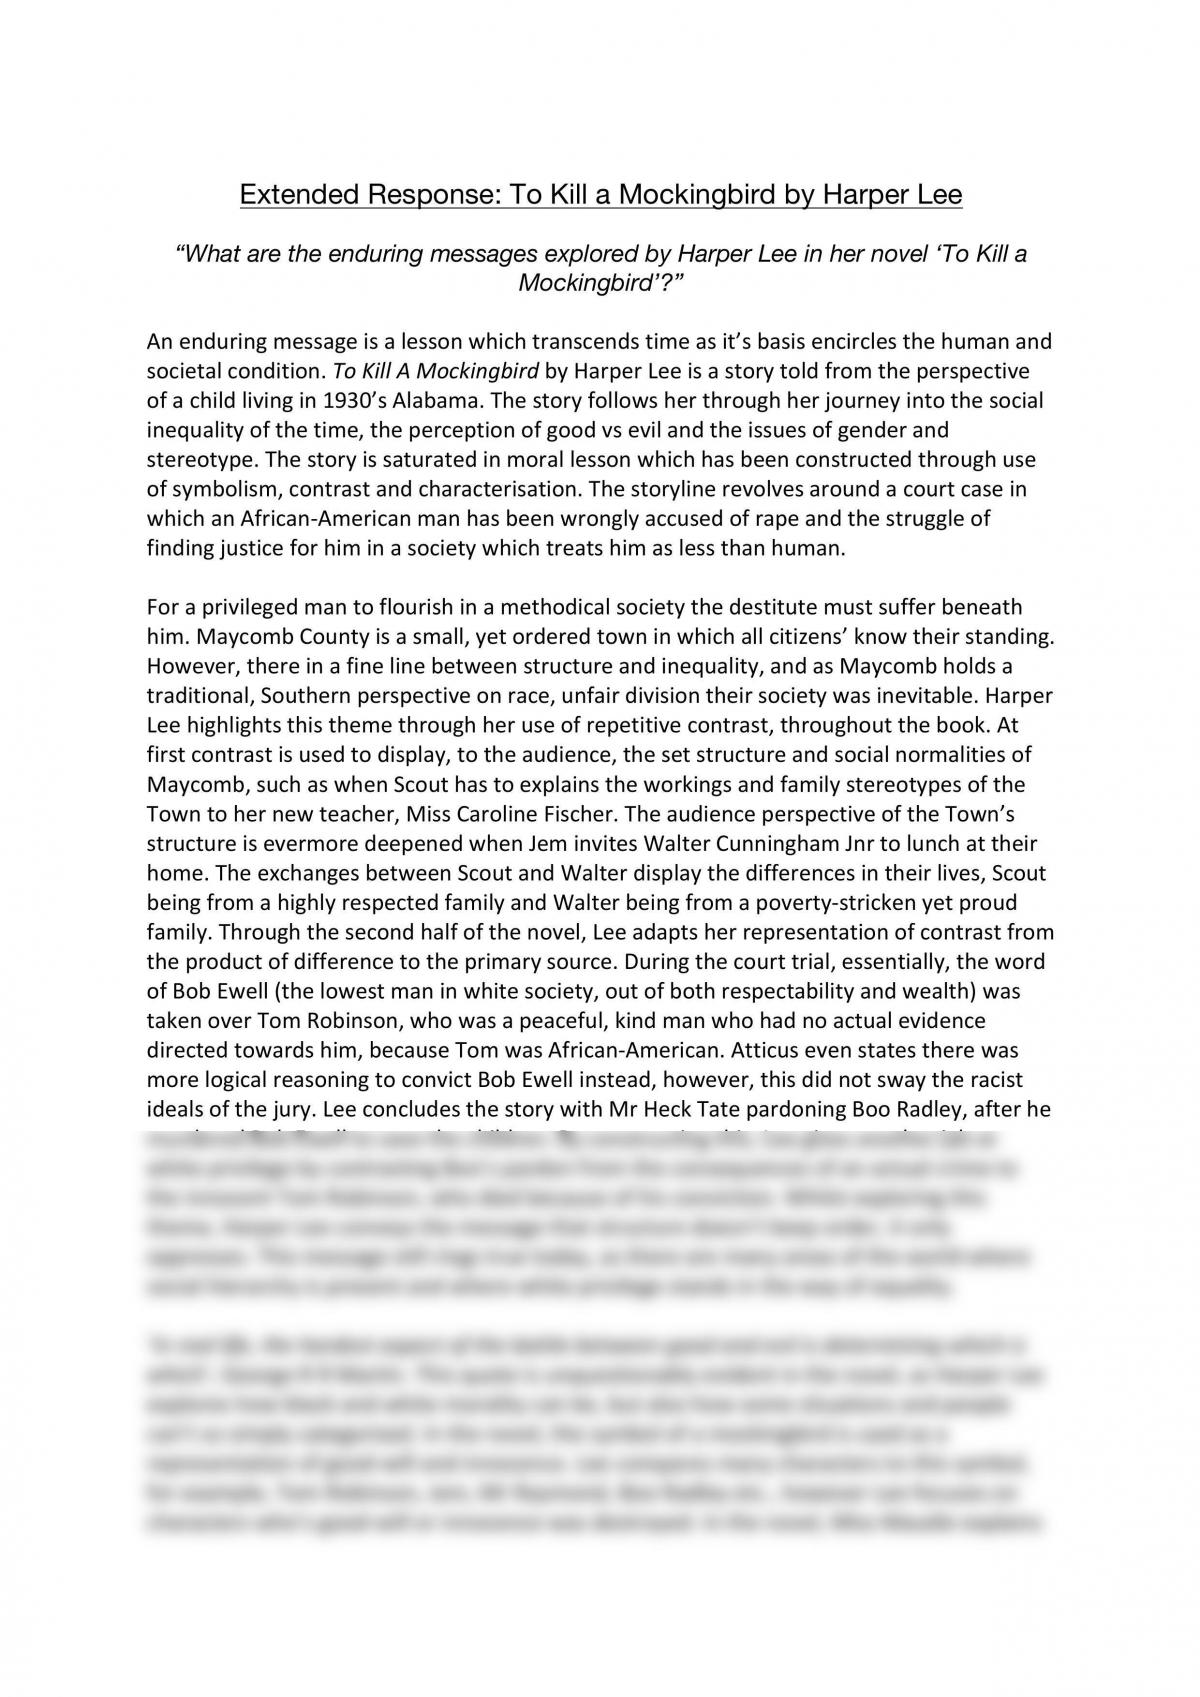 To Kill A Mockingbird Essay - Page 1